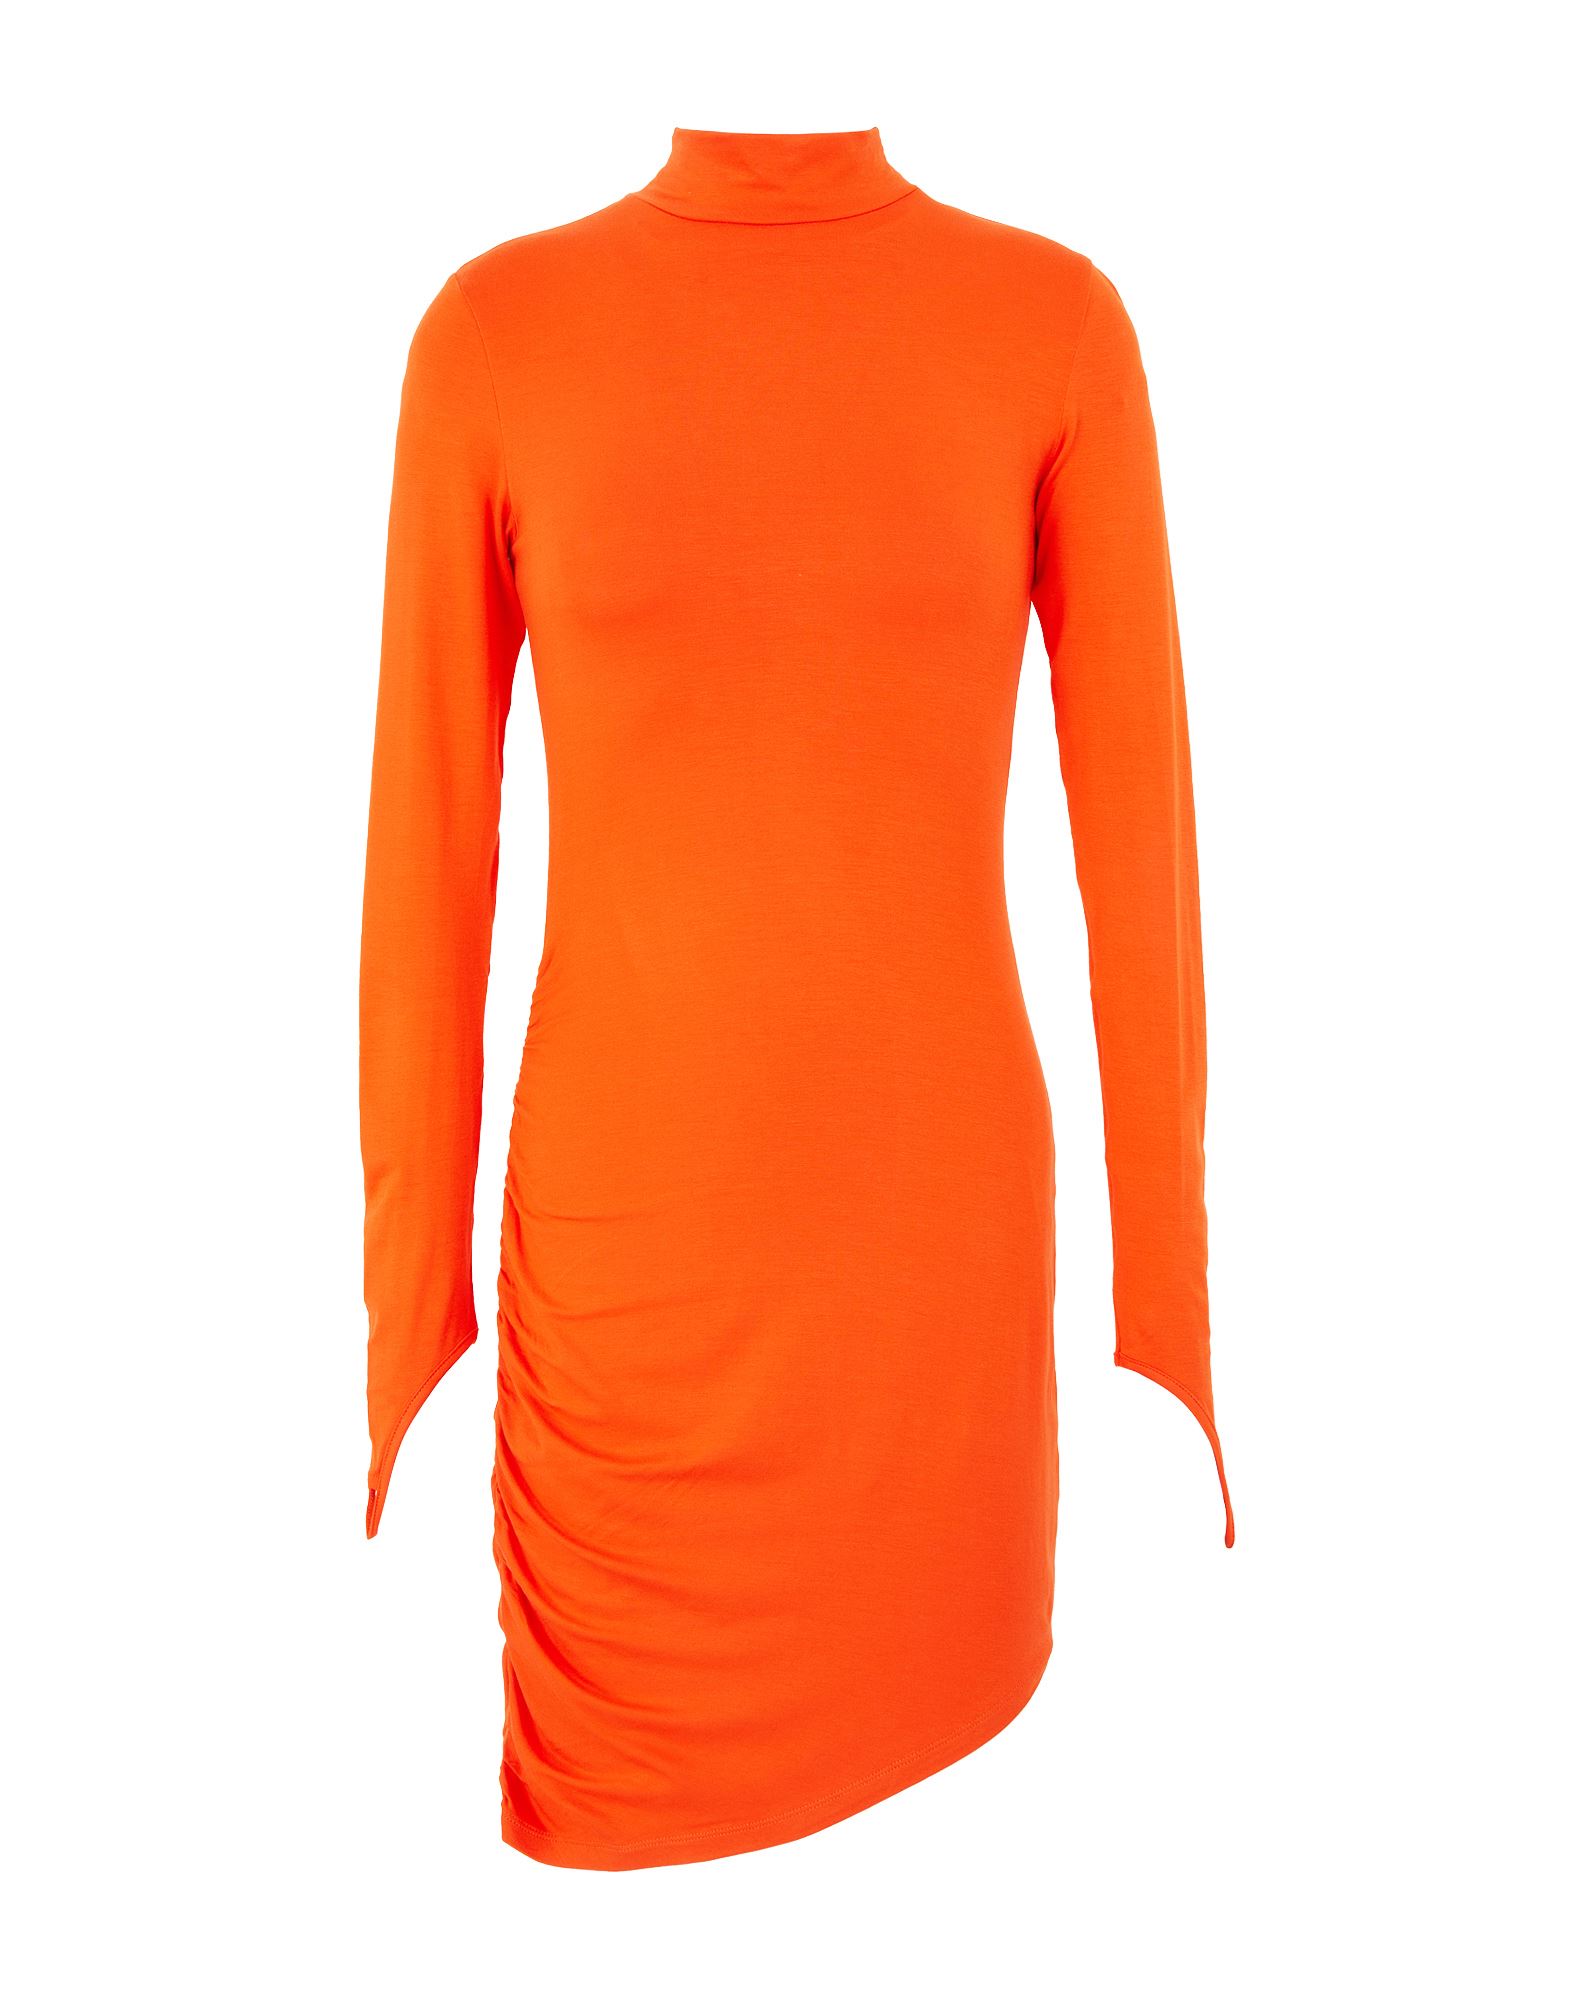 8 by YOOX Kurzes Kleid Damen Orange von 8 by YOOX